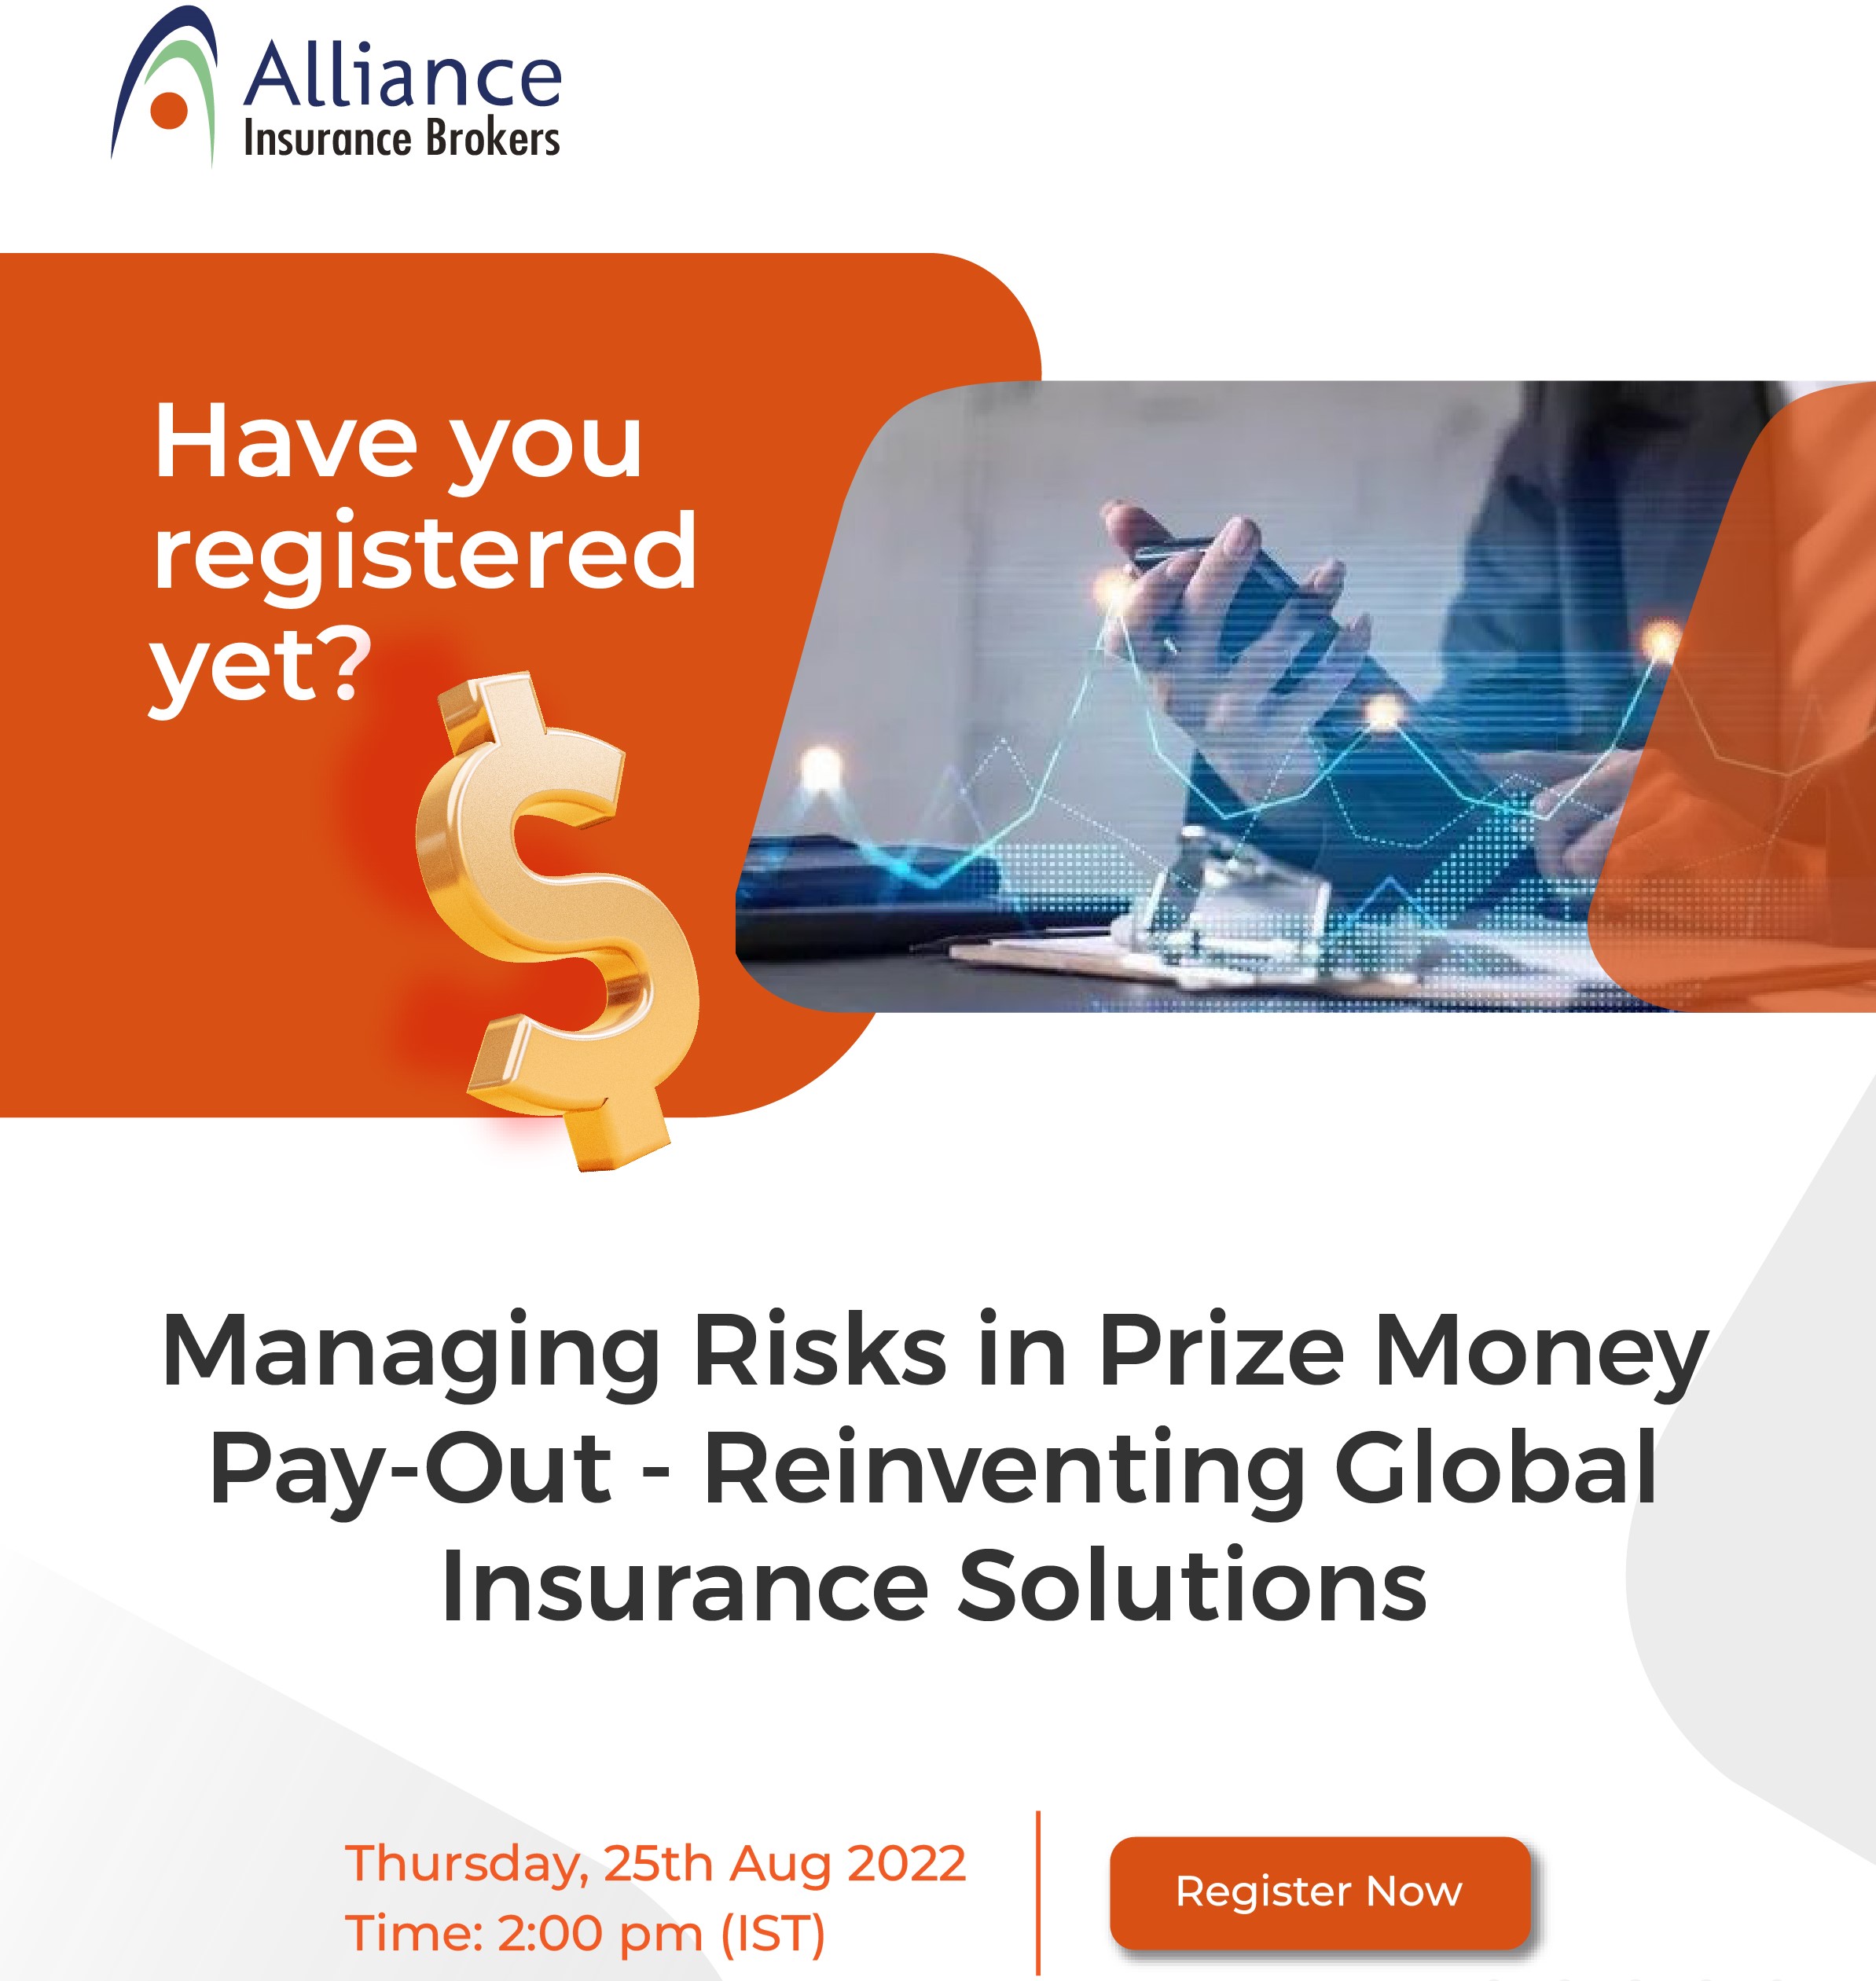 Alliance India Presents Unique Prize Money Insurance